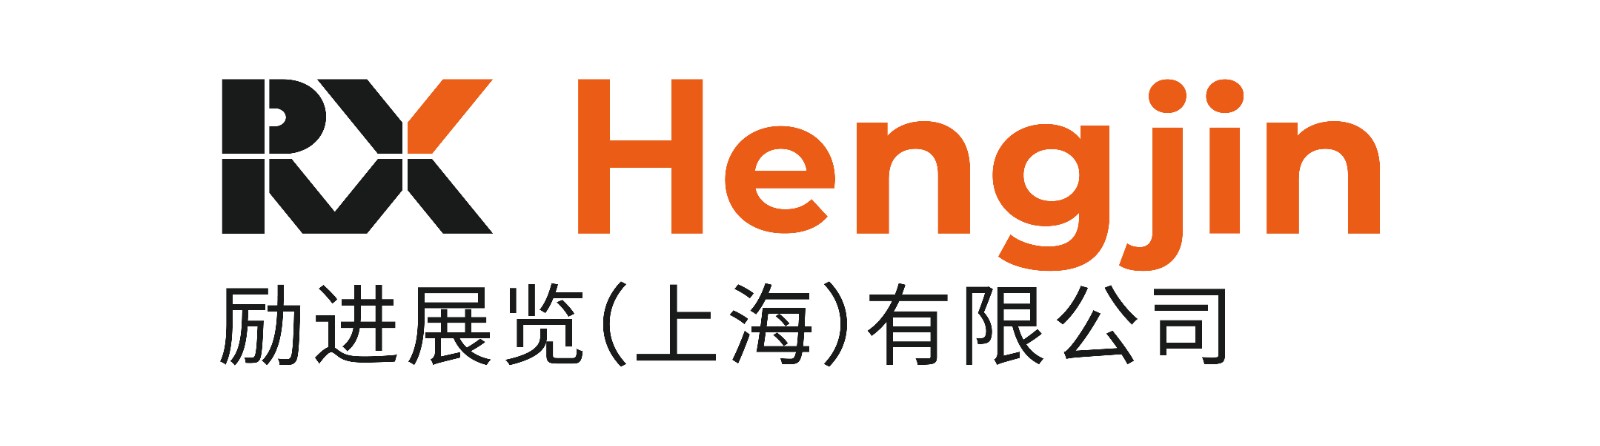 Reed Exhibitions Hengjin (Shanghai) Co., Ltd.